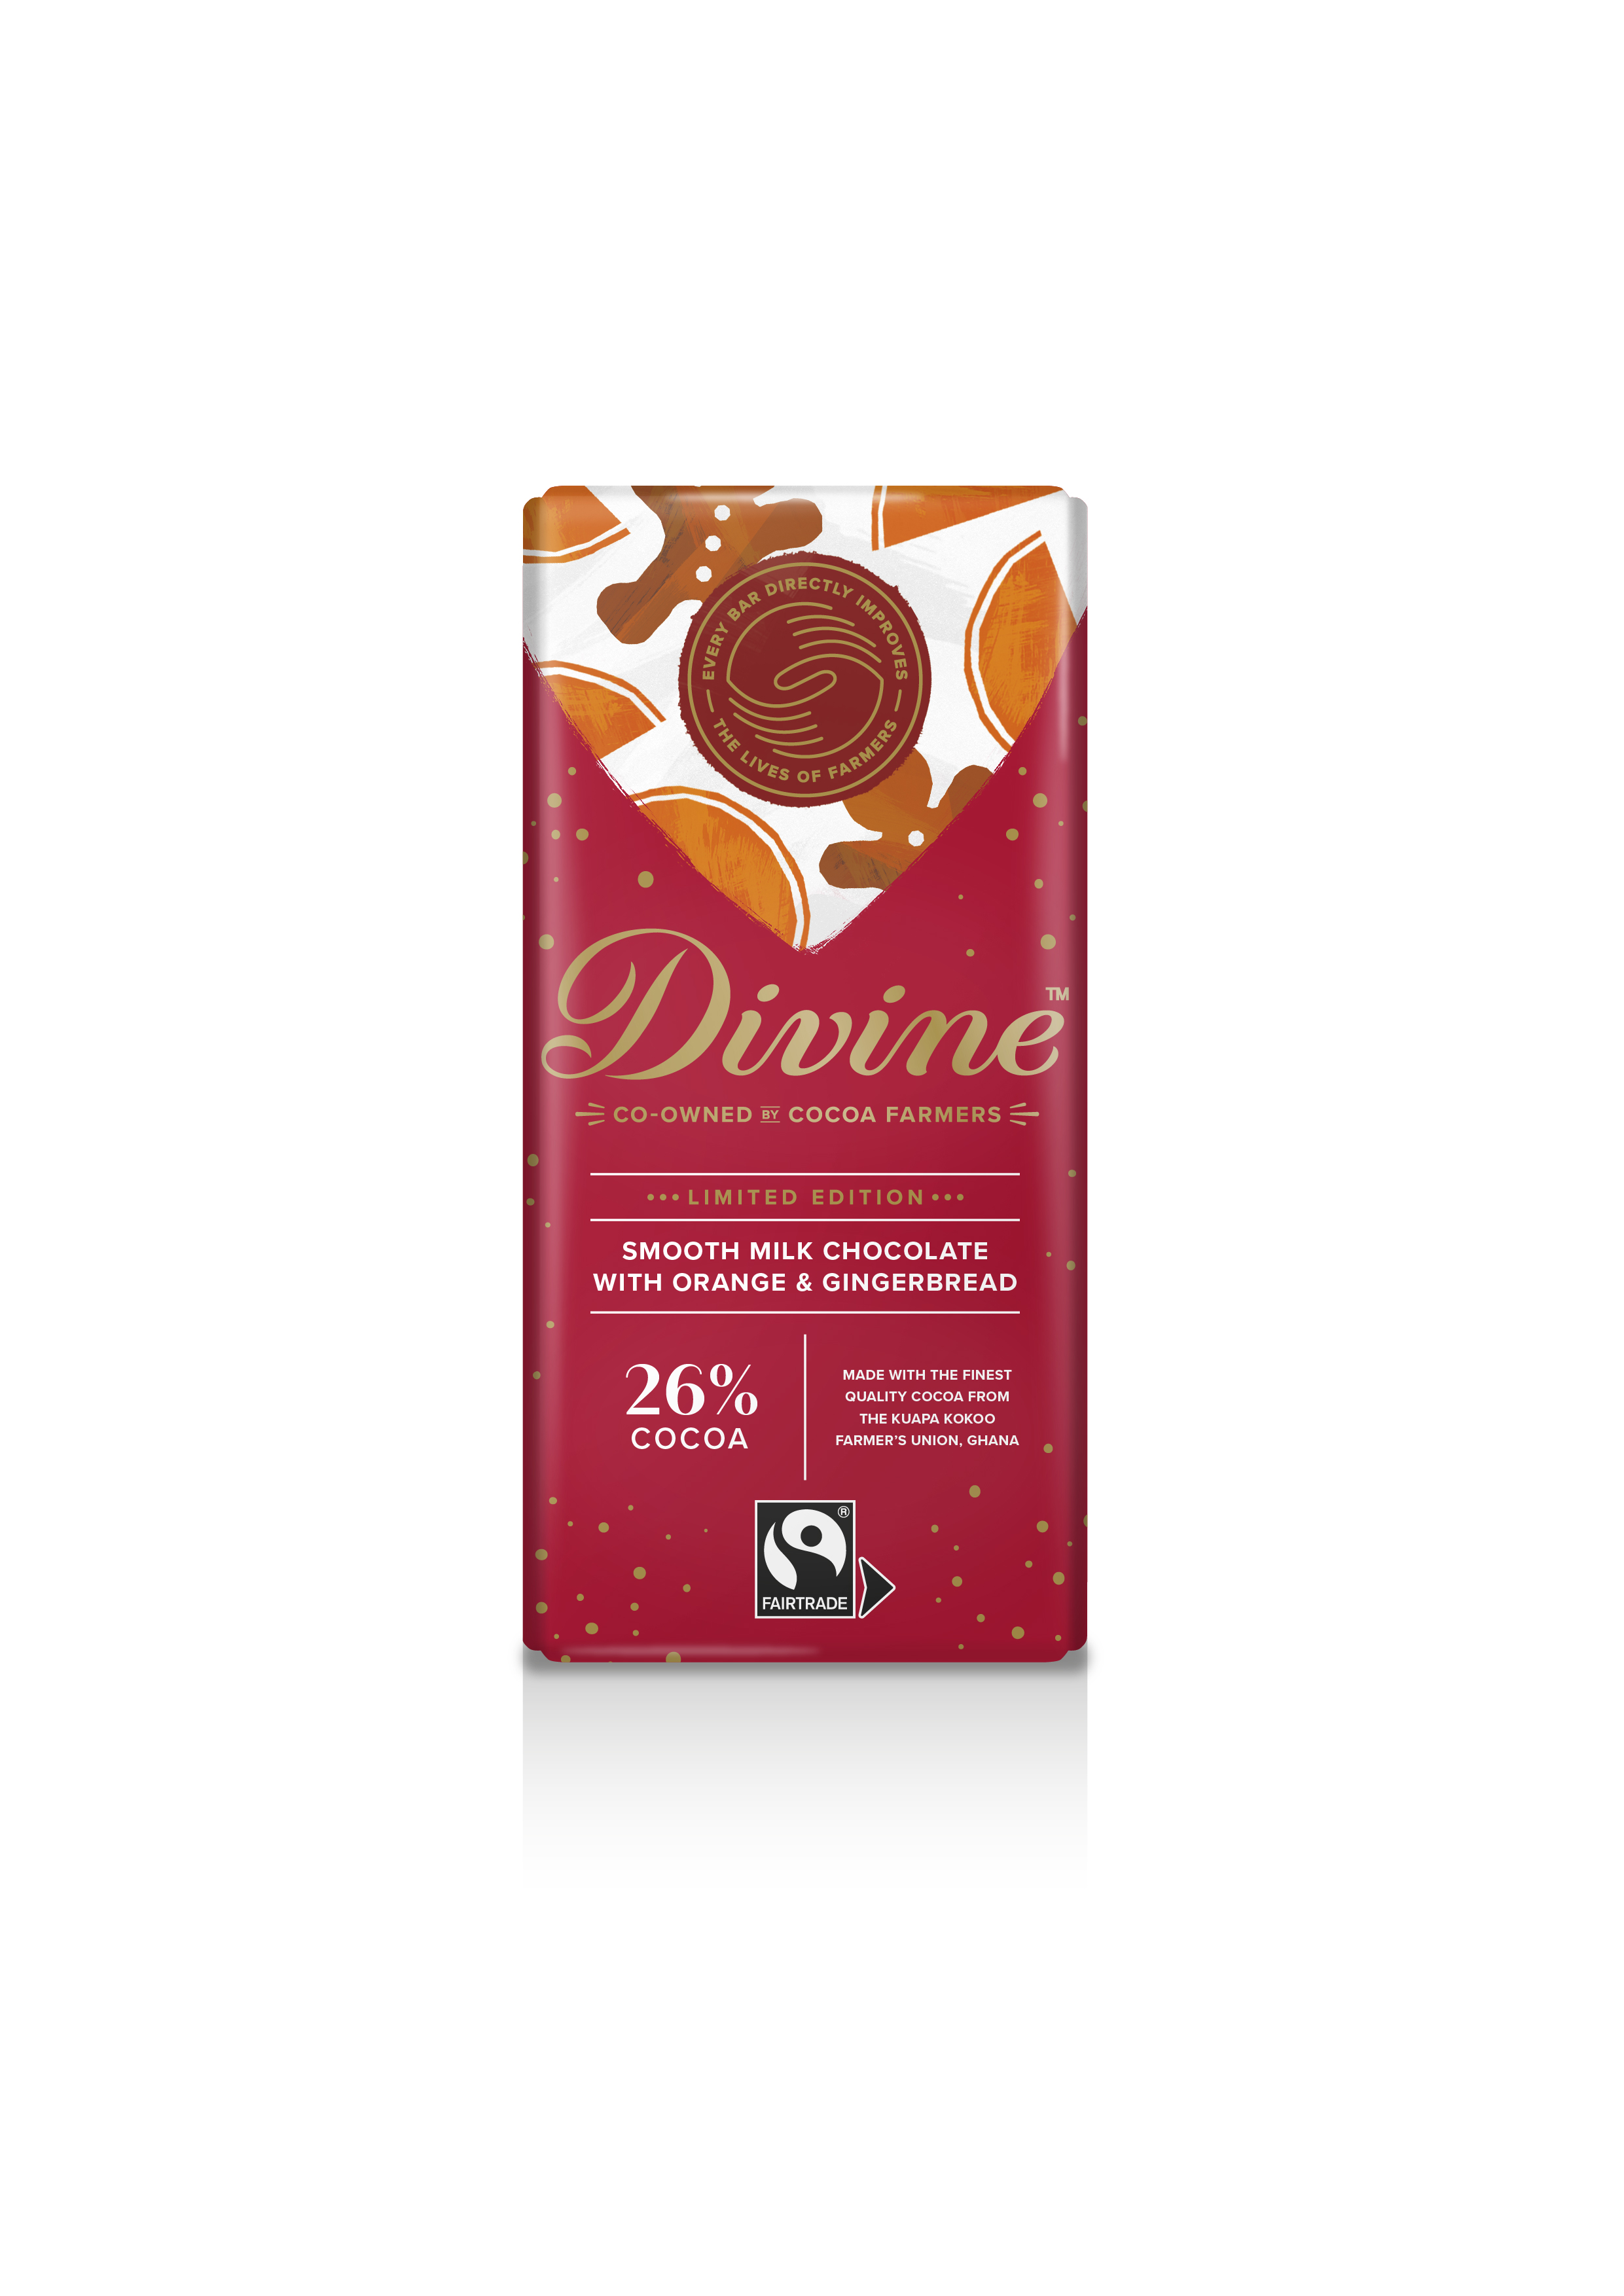 Divine 45 % Milk Chocolate, 90g